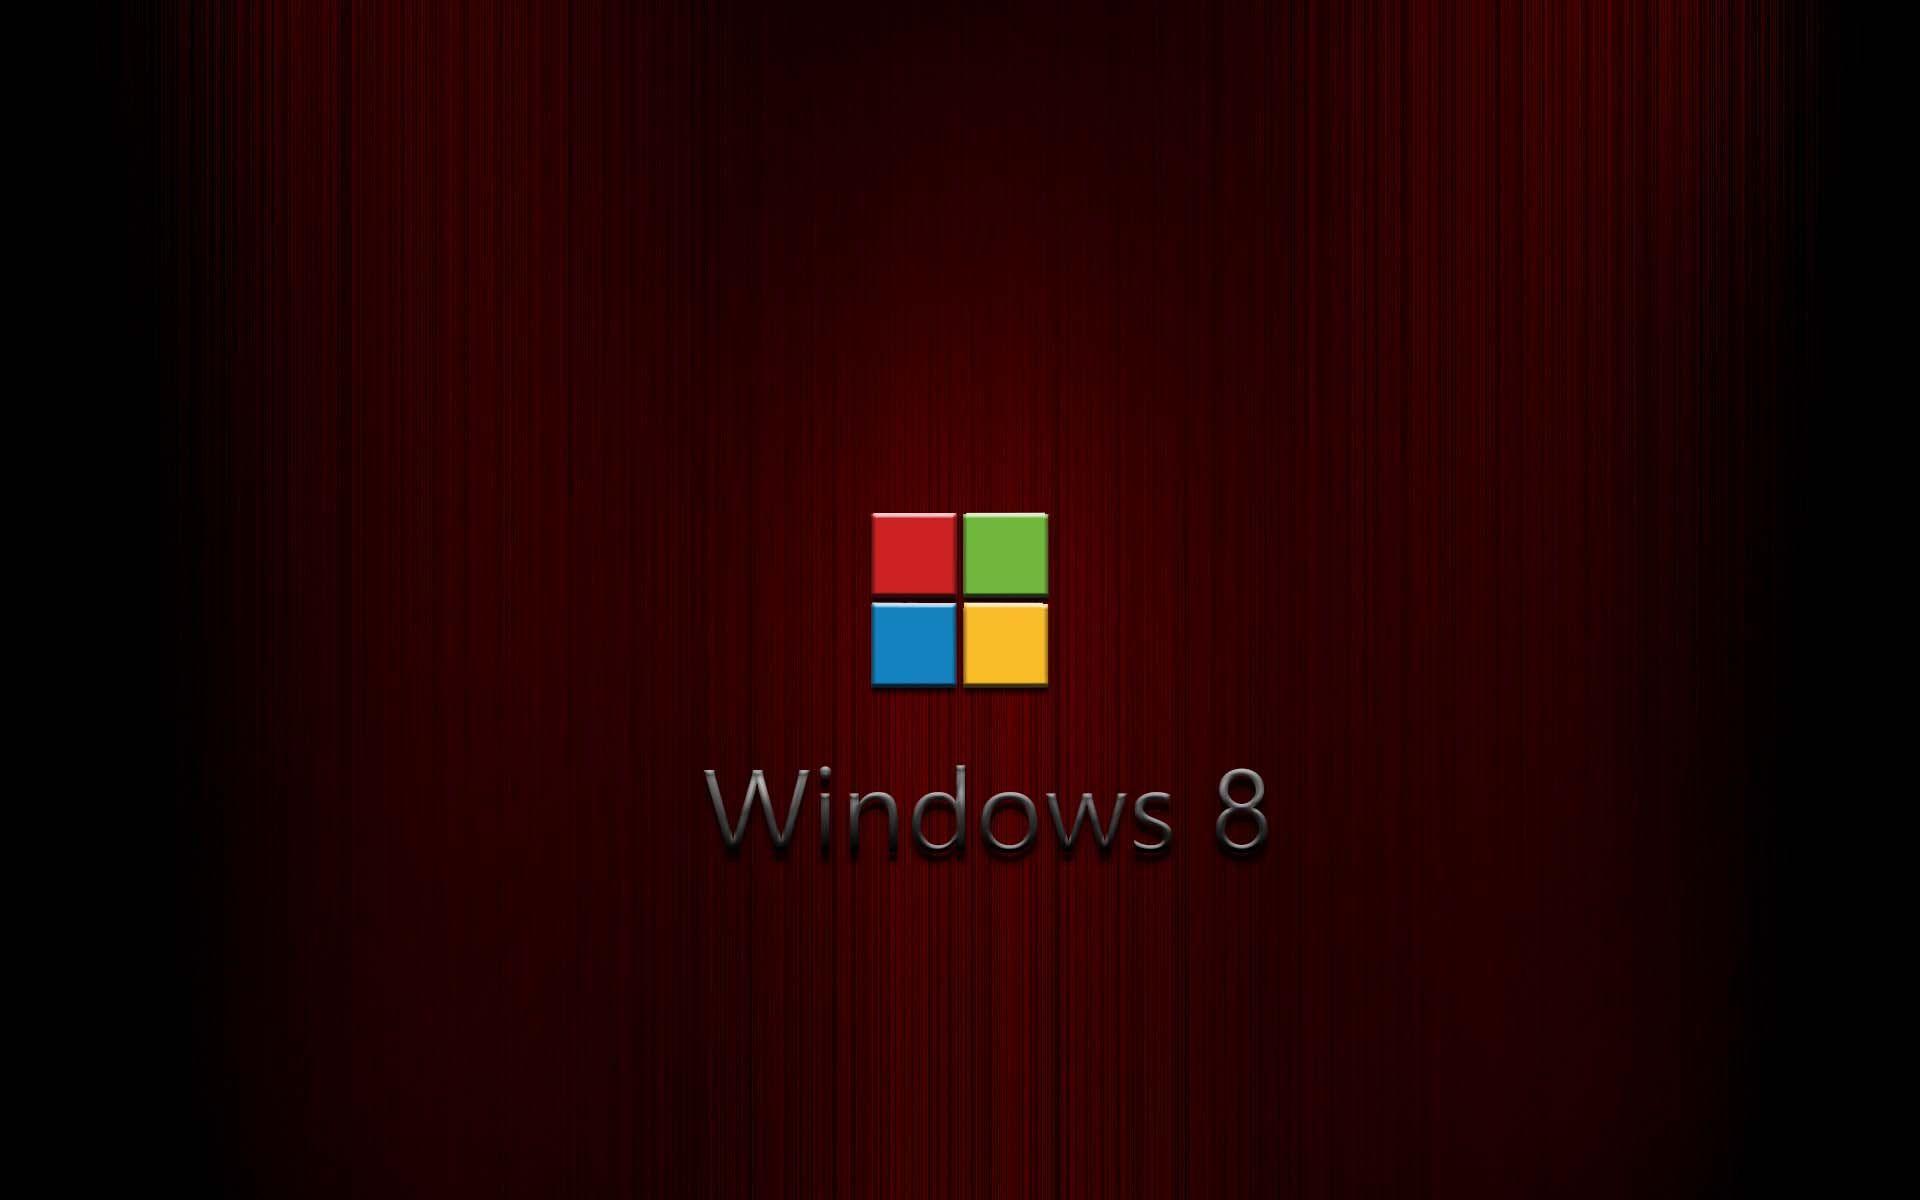 Dark Windows 8 Background. HD Brands and Logos Wallpaper